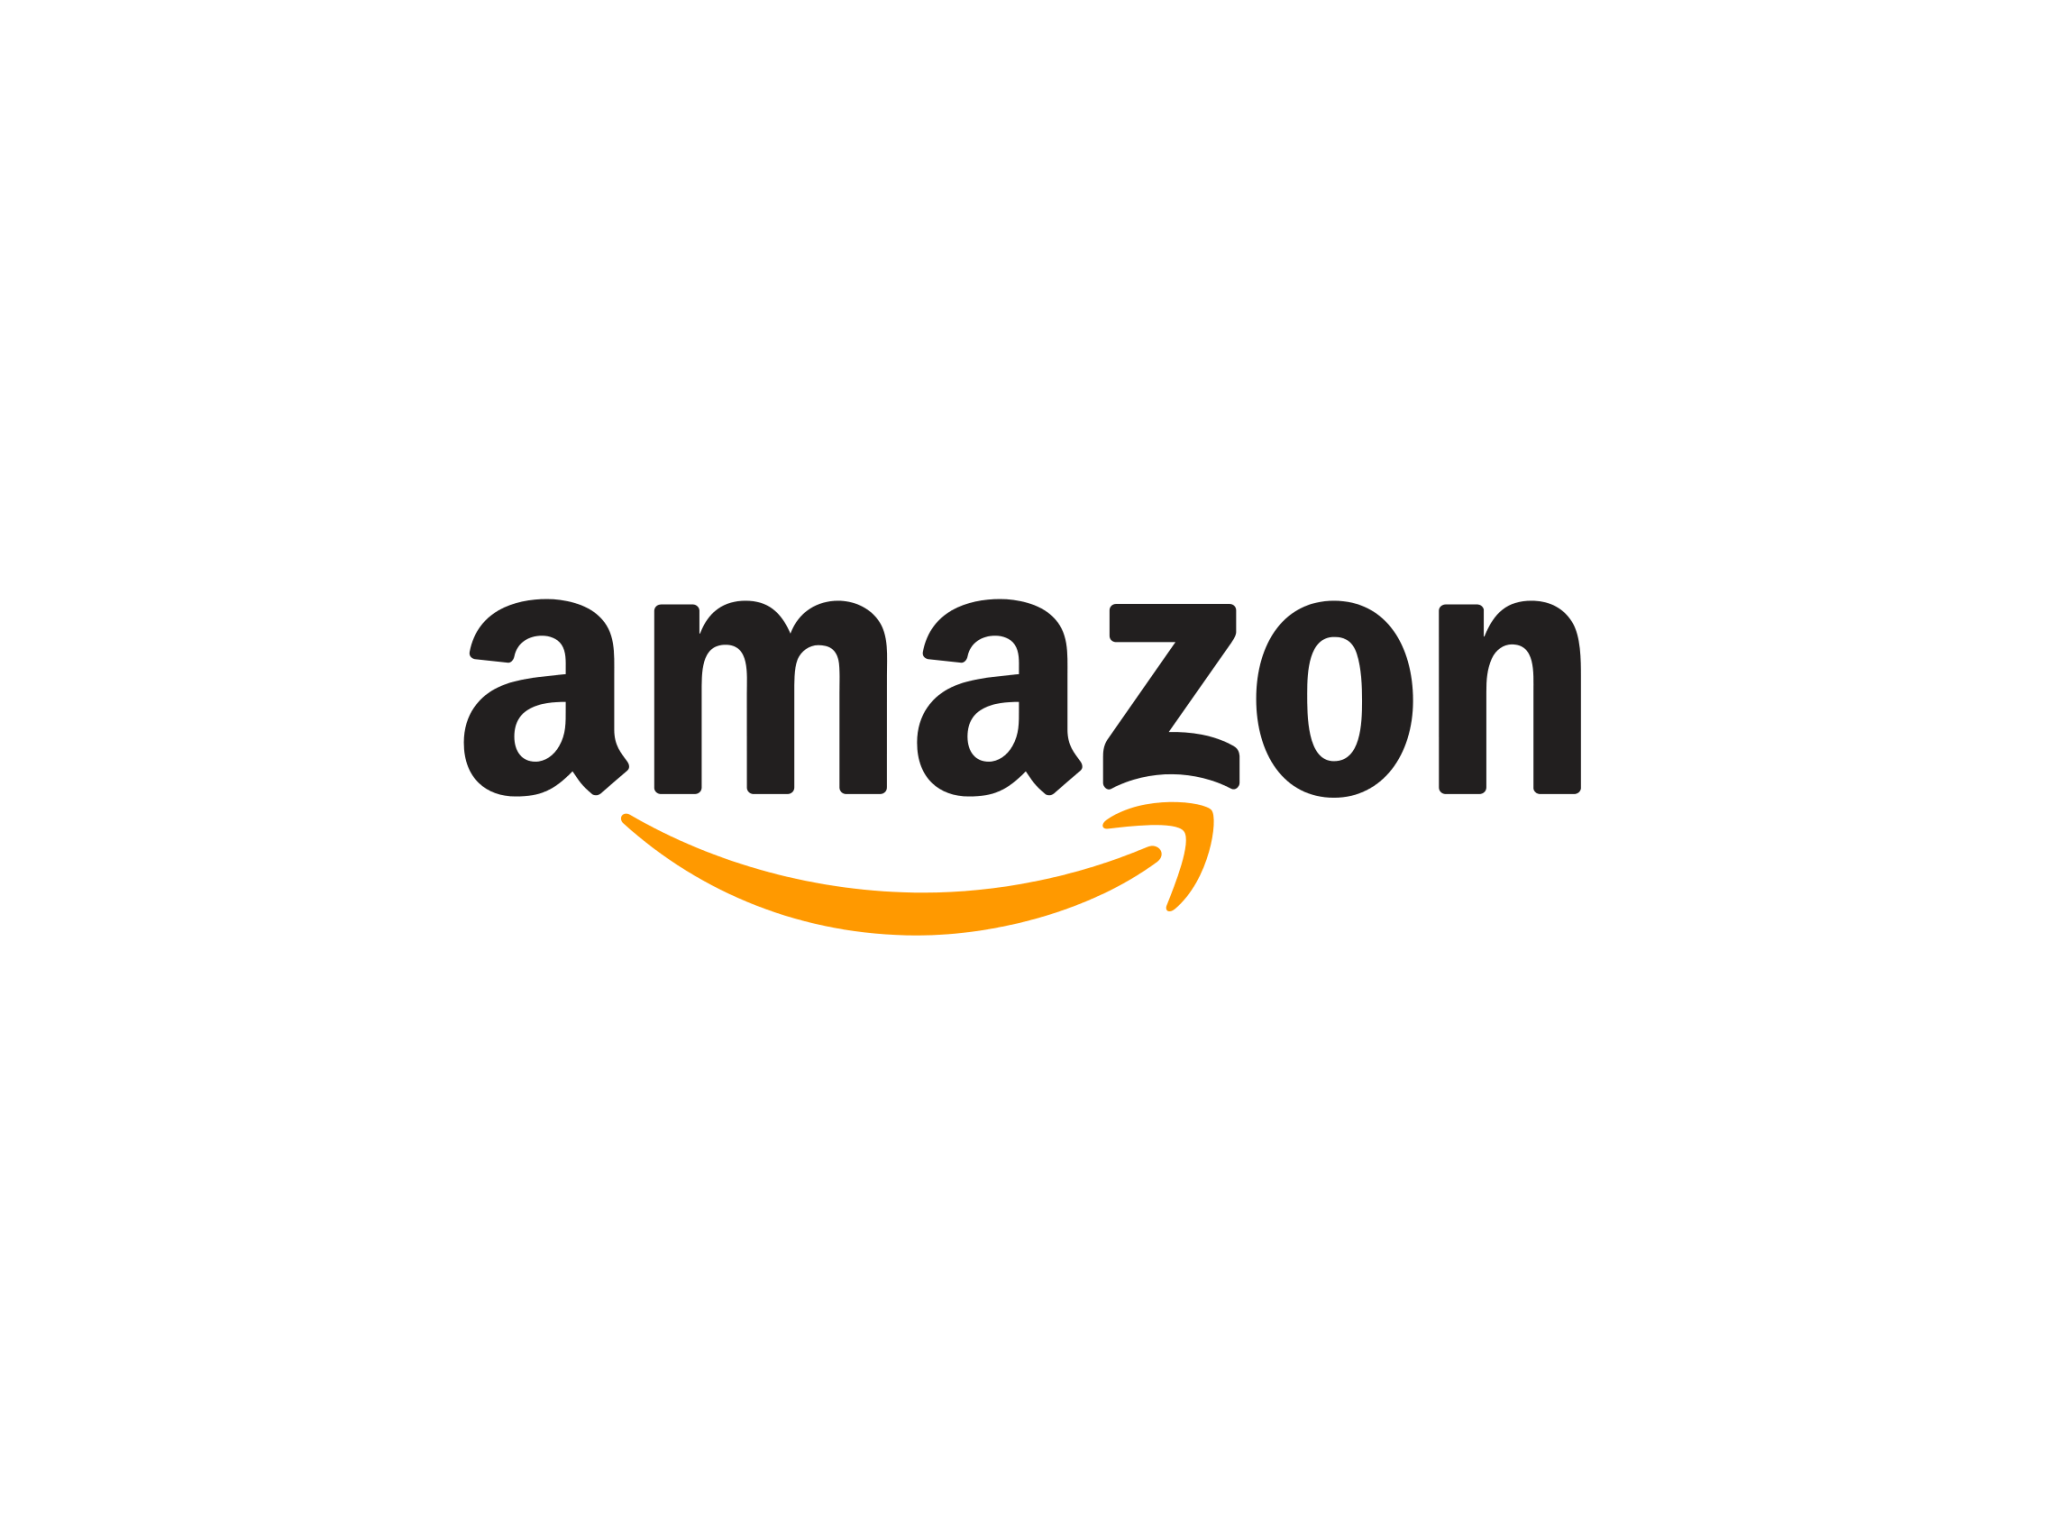 Amazong Logo - Amazon Logo PNG Image. Free transparent CC0 PNG Image Library